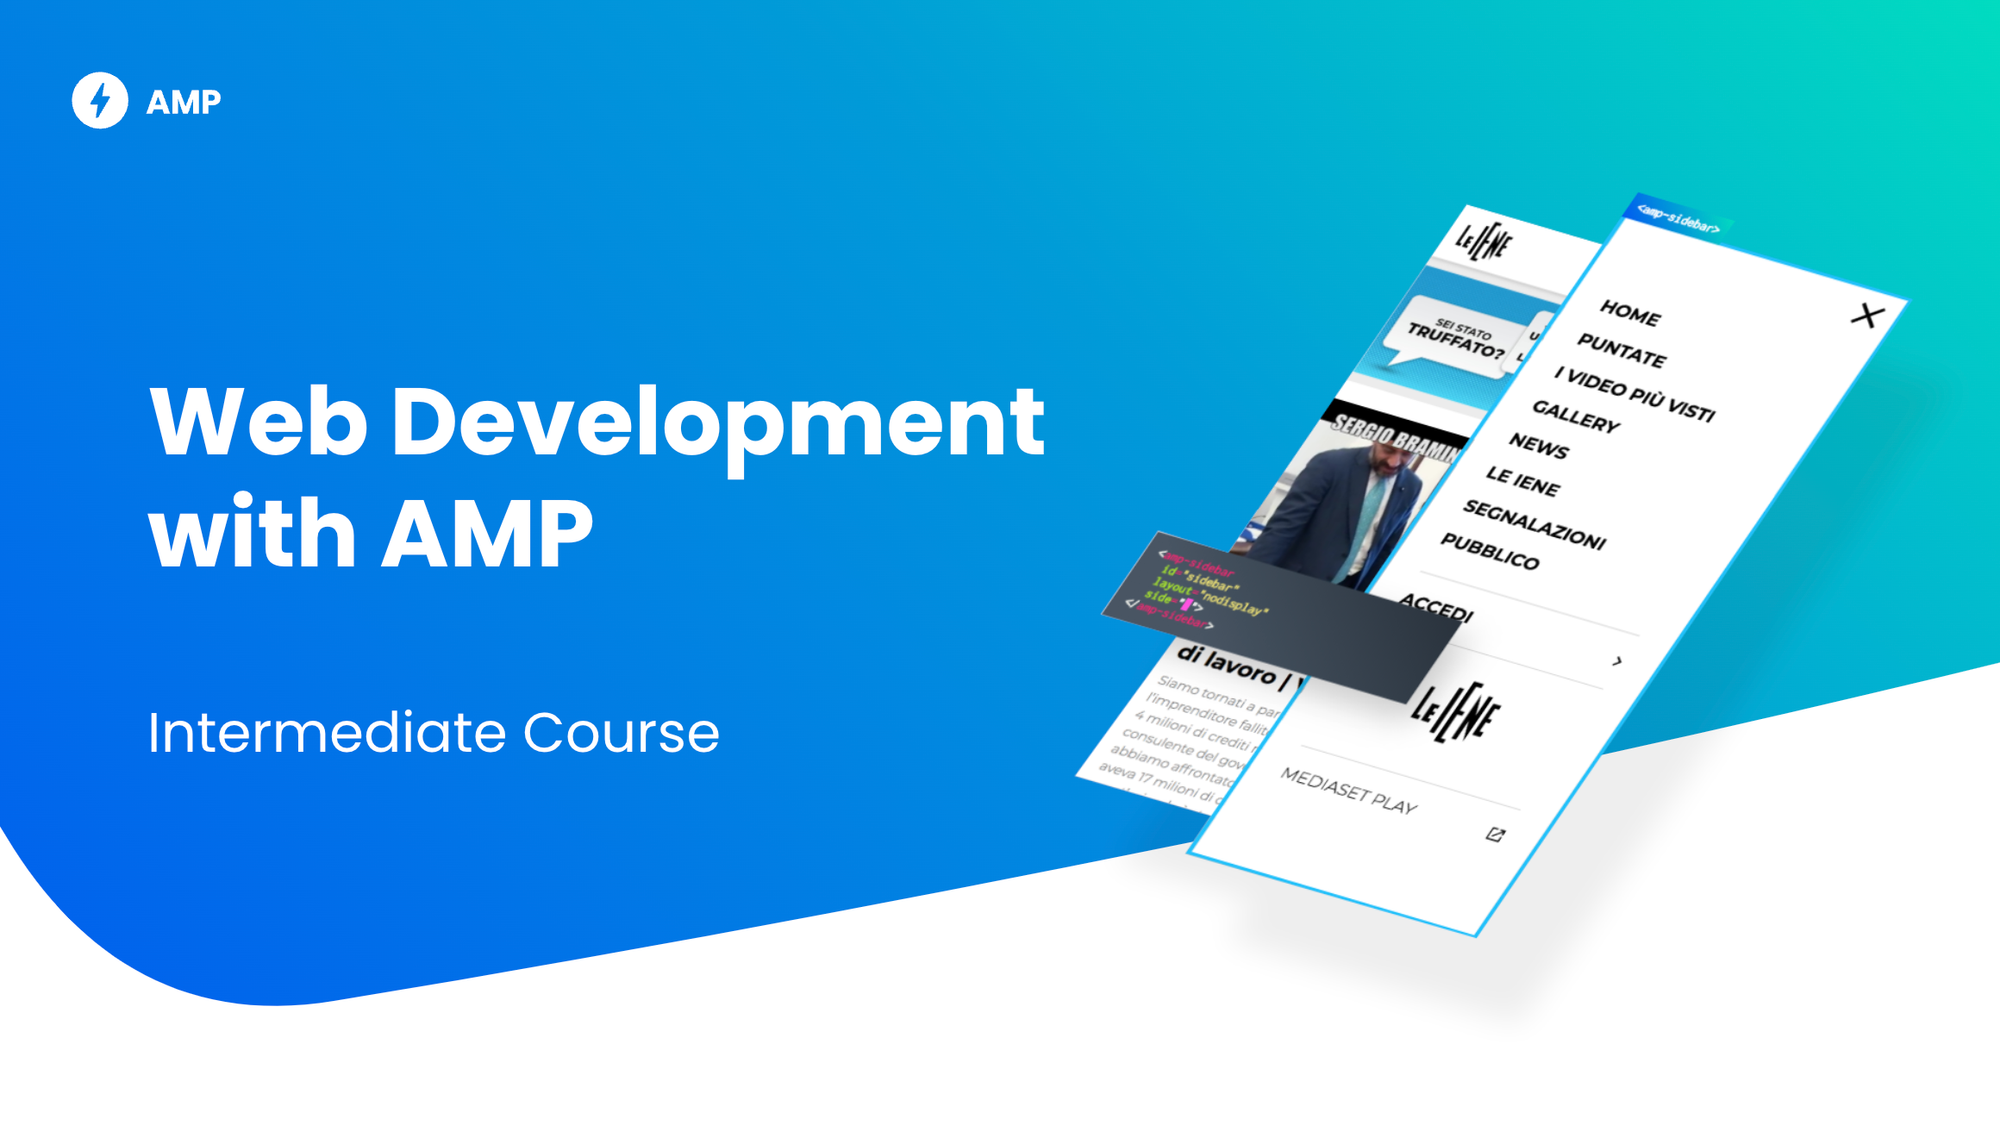 Web Development with AMP